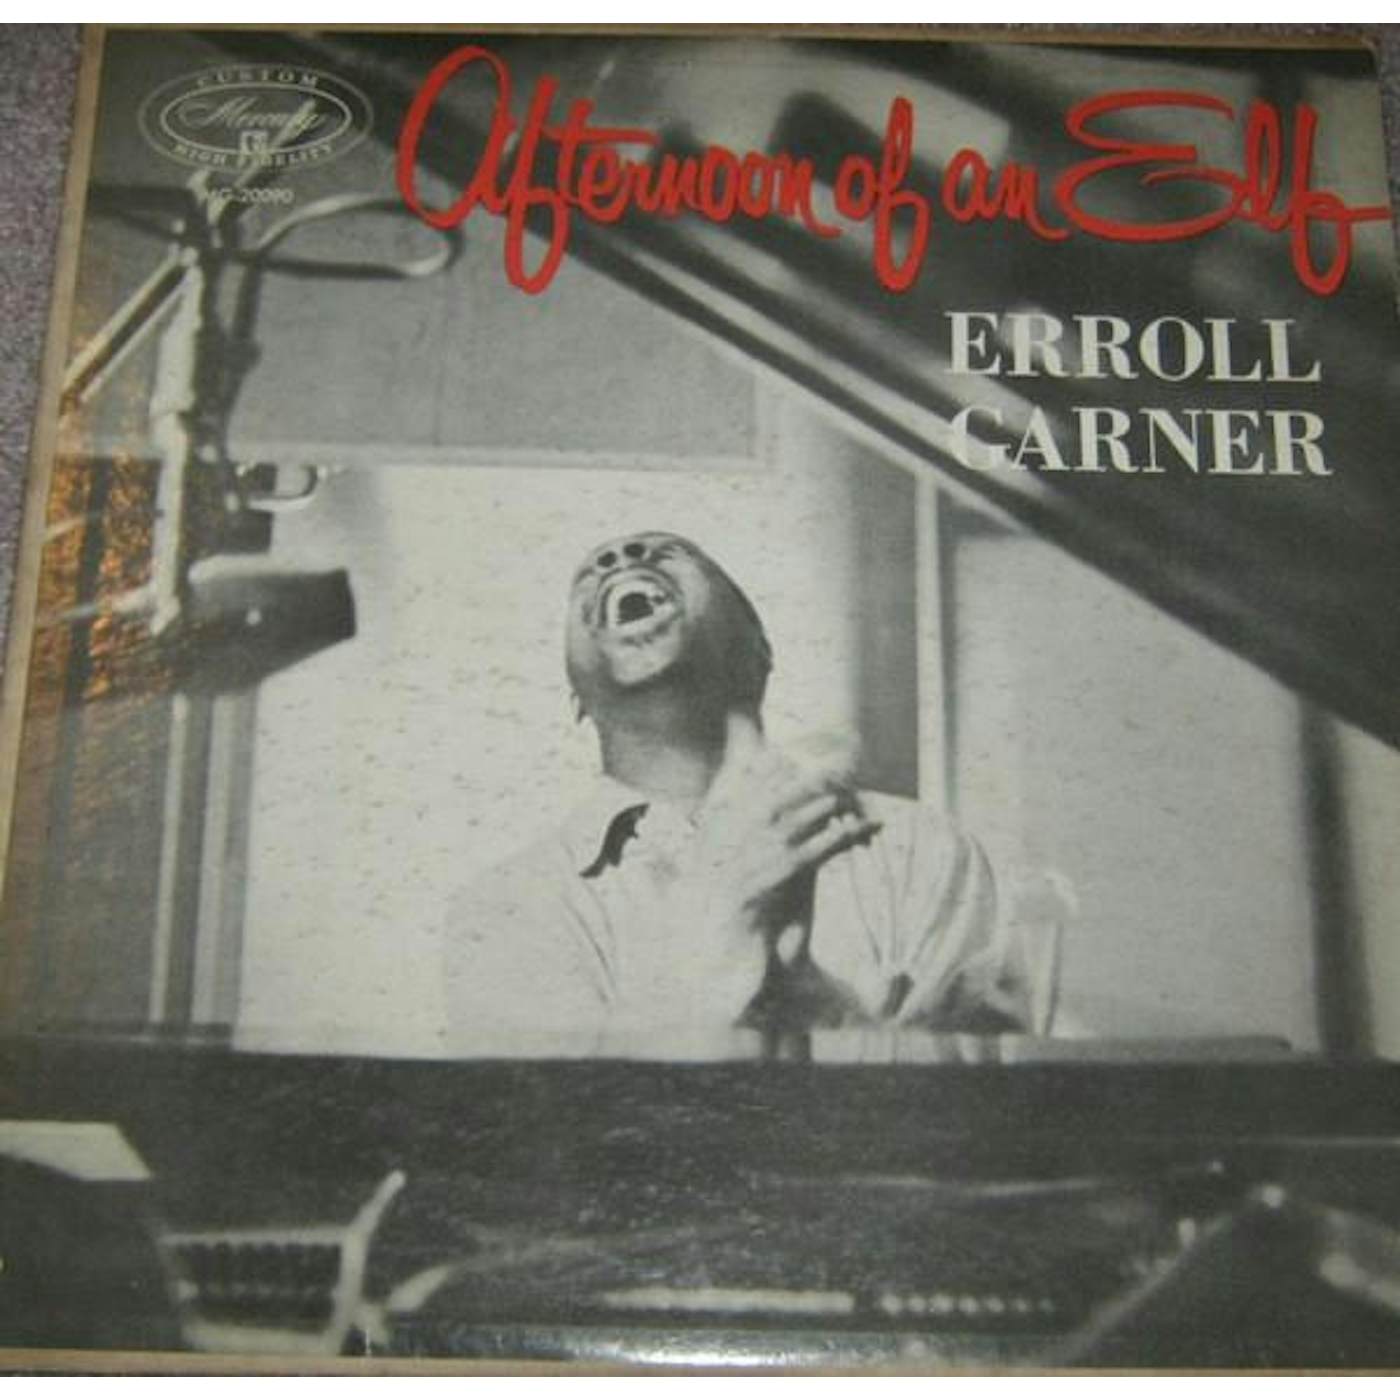 Erroll Garner AFTERNOON OF AN ELF CD